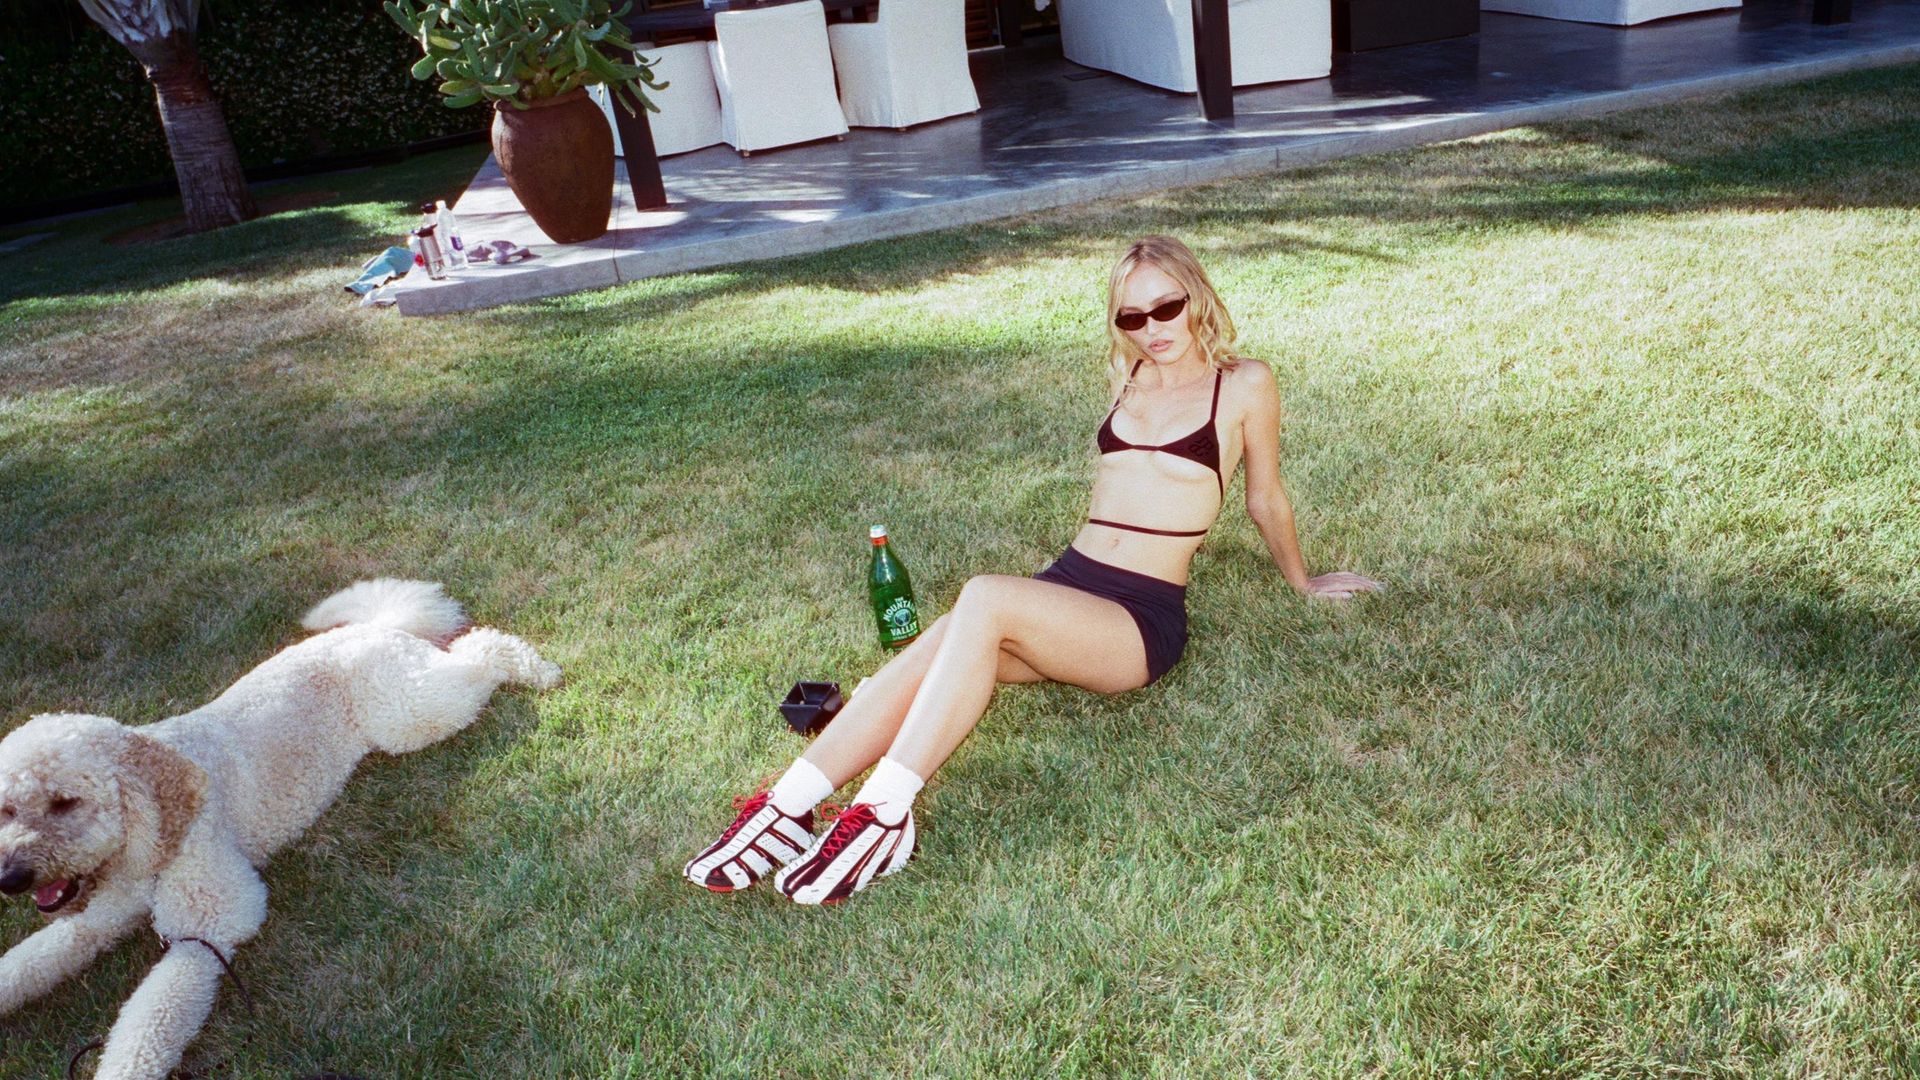 Jocelyn lies on the grass wearing black bra and micro skirt 